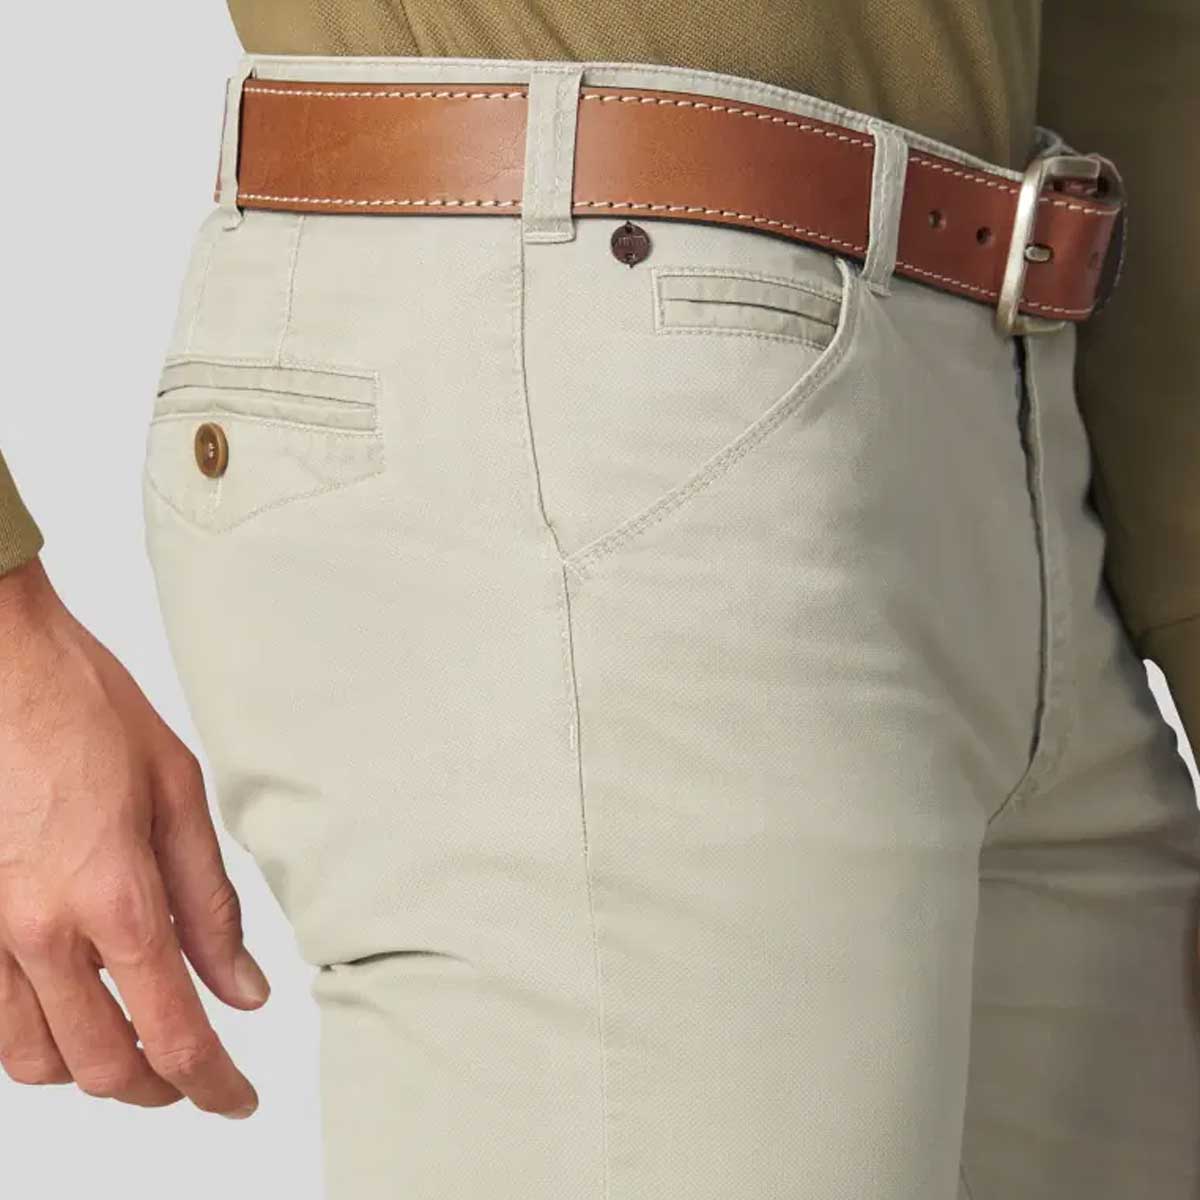 MEYER Casual Jeans Belt - Handmade Leather - Tan